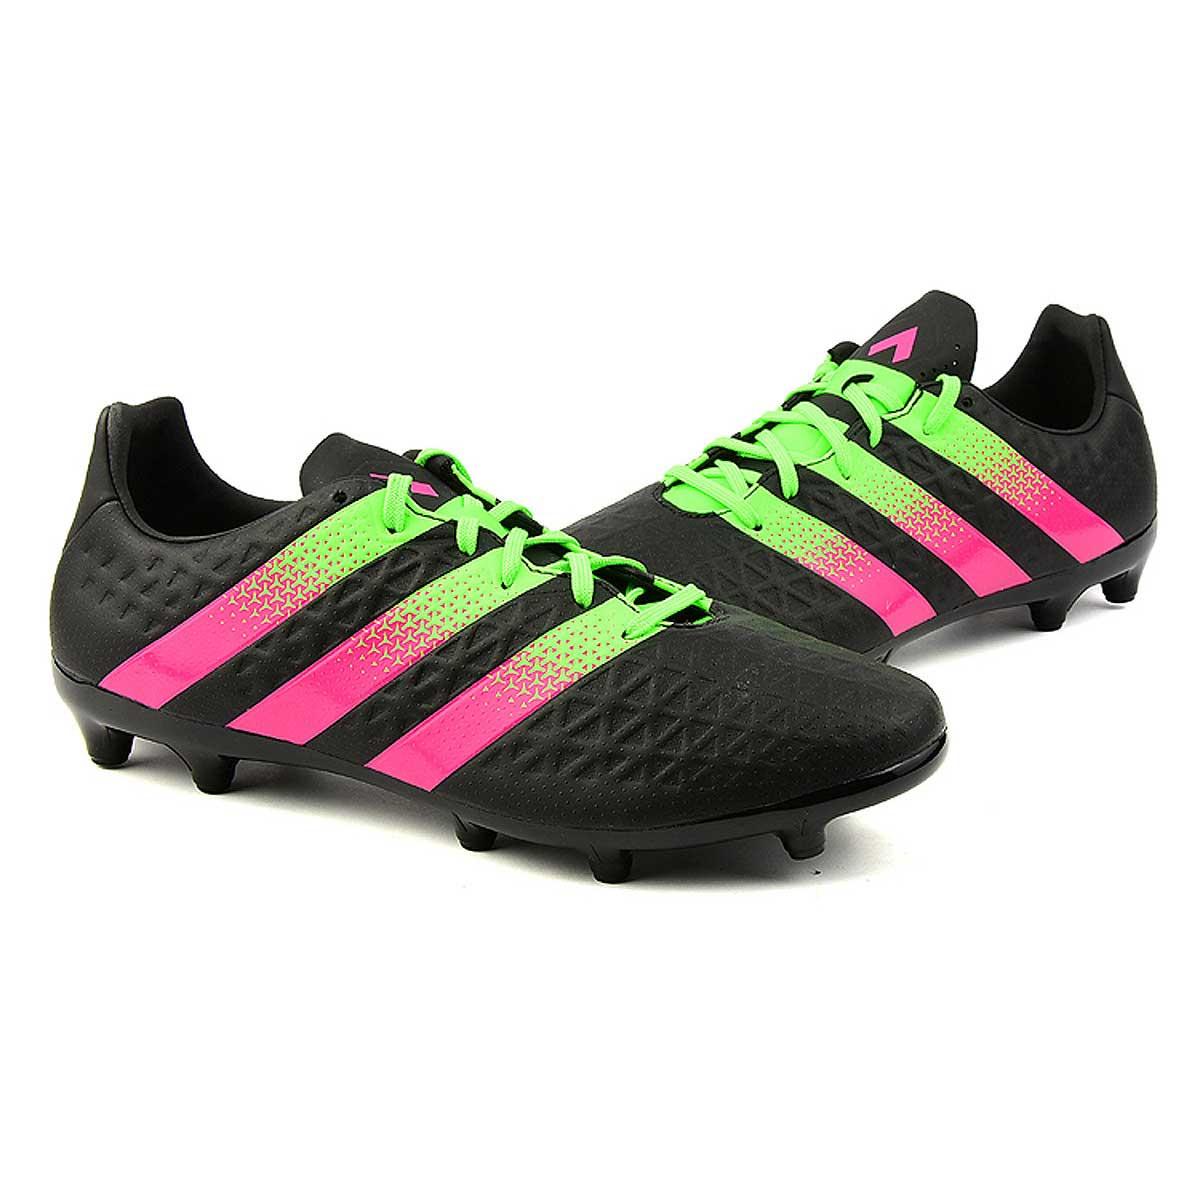 Cordelia forbandelse Postbud Buy Adidas ACE 16.3 FG/AG Football Shoes (Black/Green) Online India